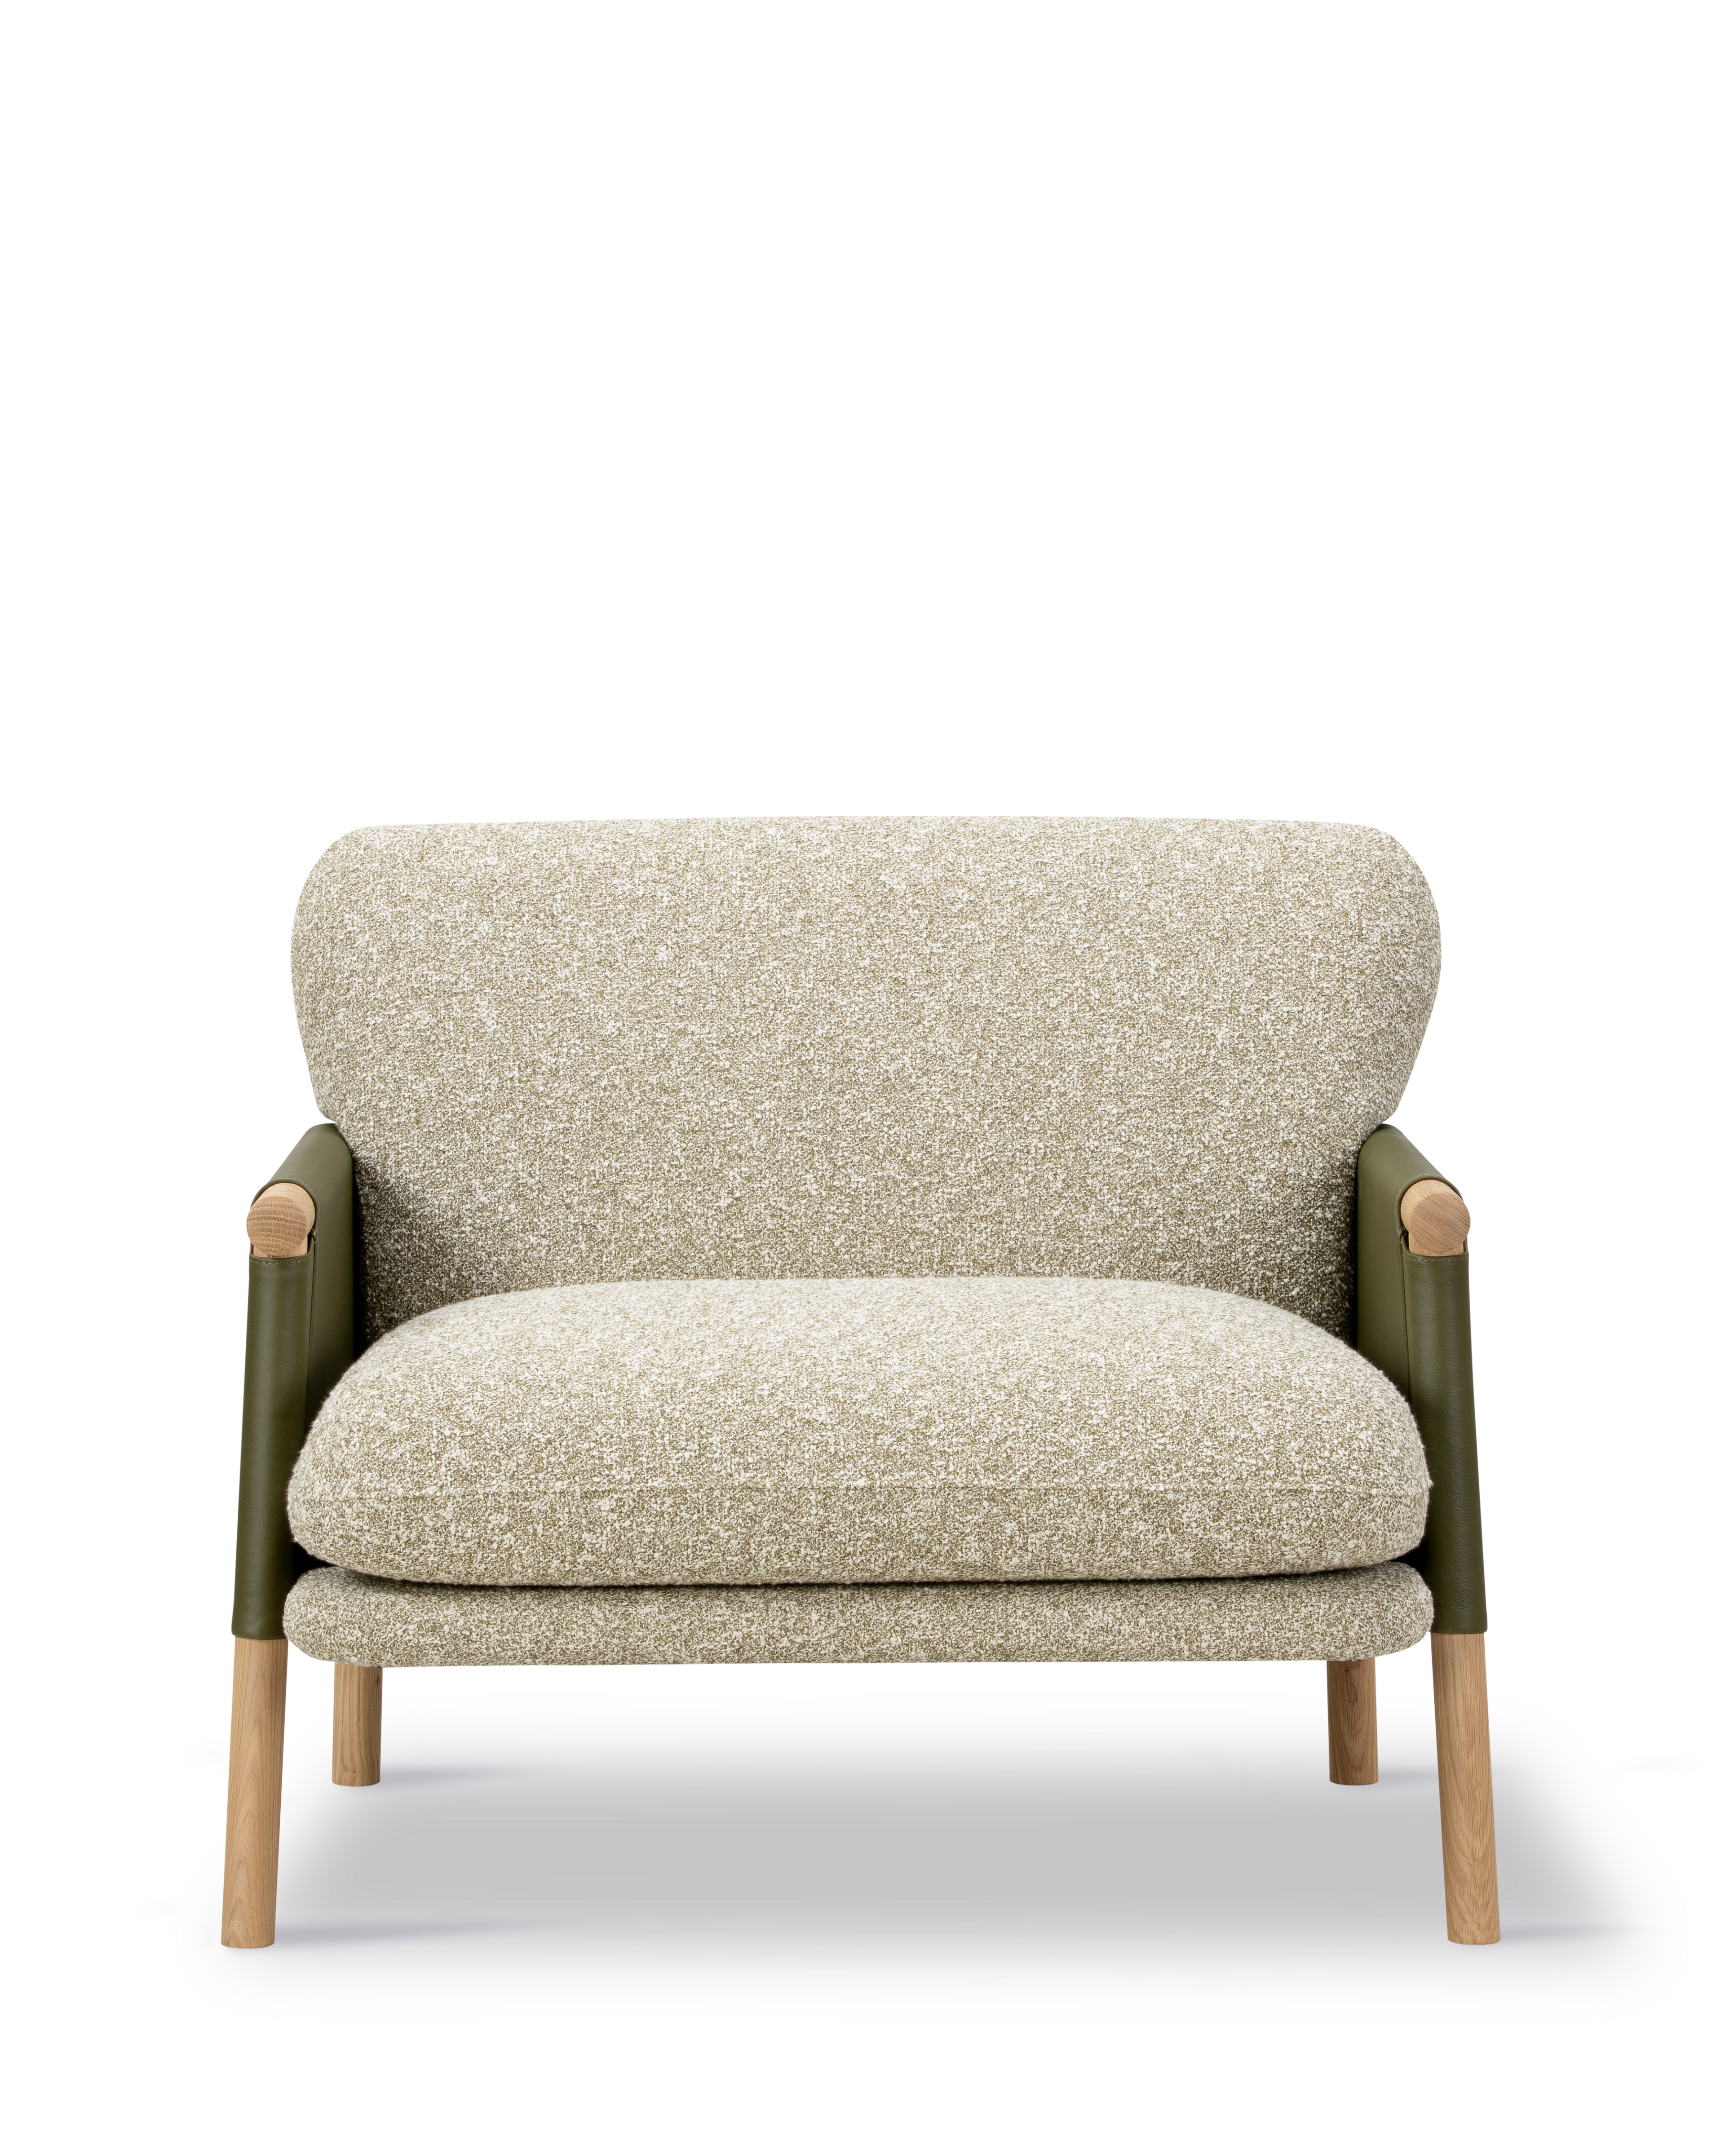 Savannah Lounge Chair - Læder 814 Trace / Zero 0002 / Eg lys olie